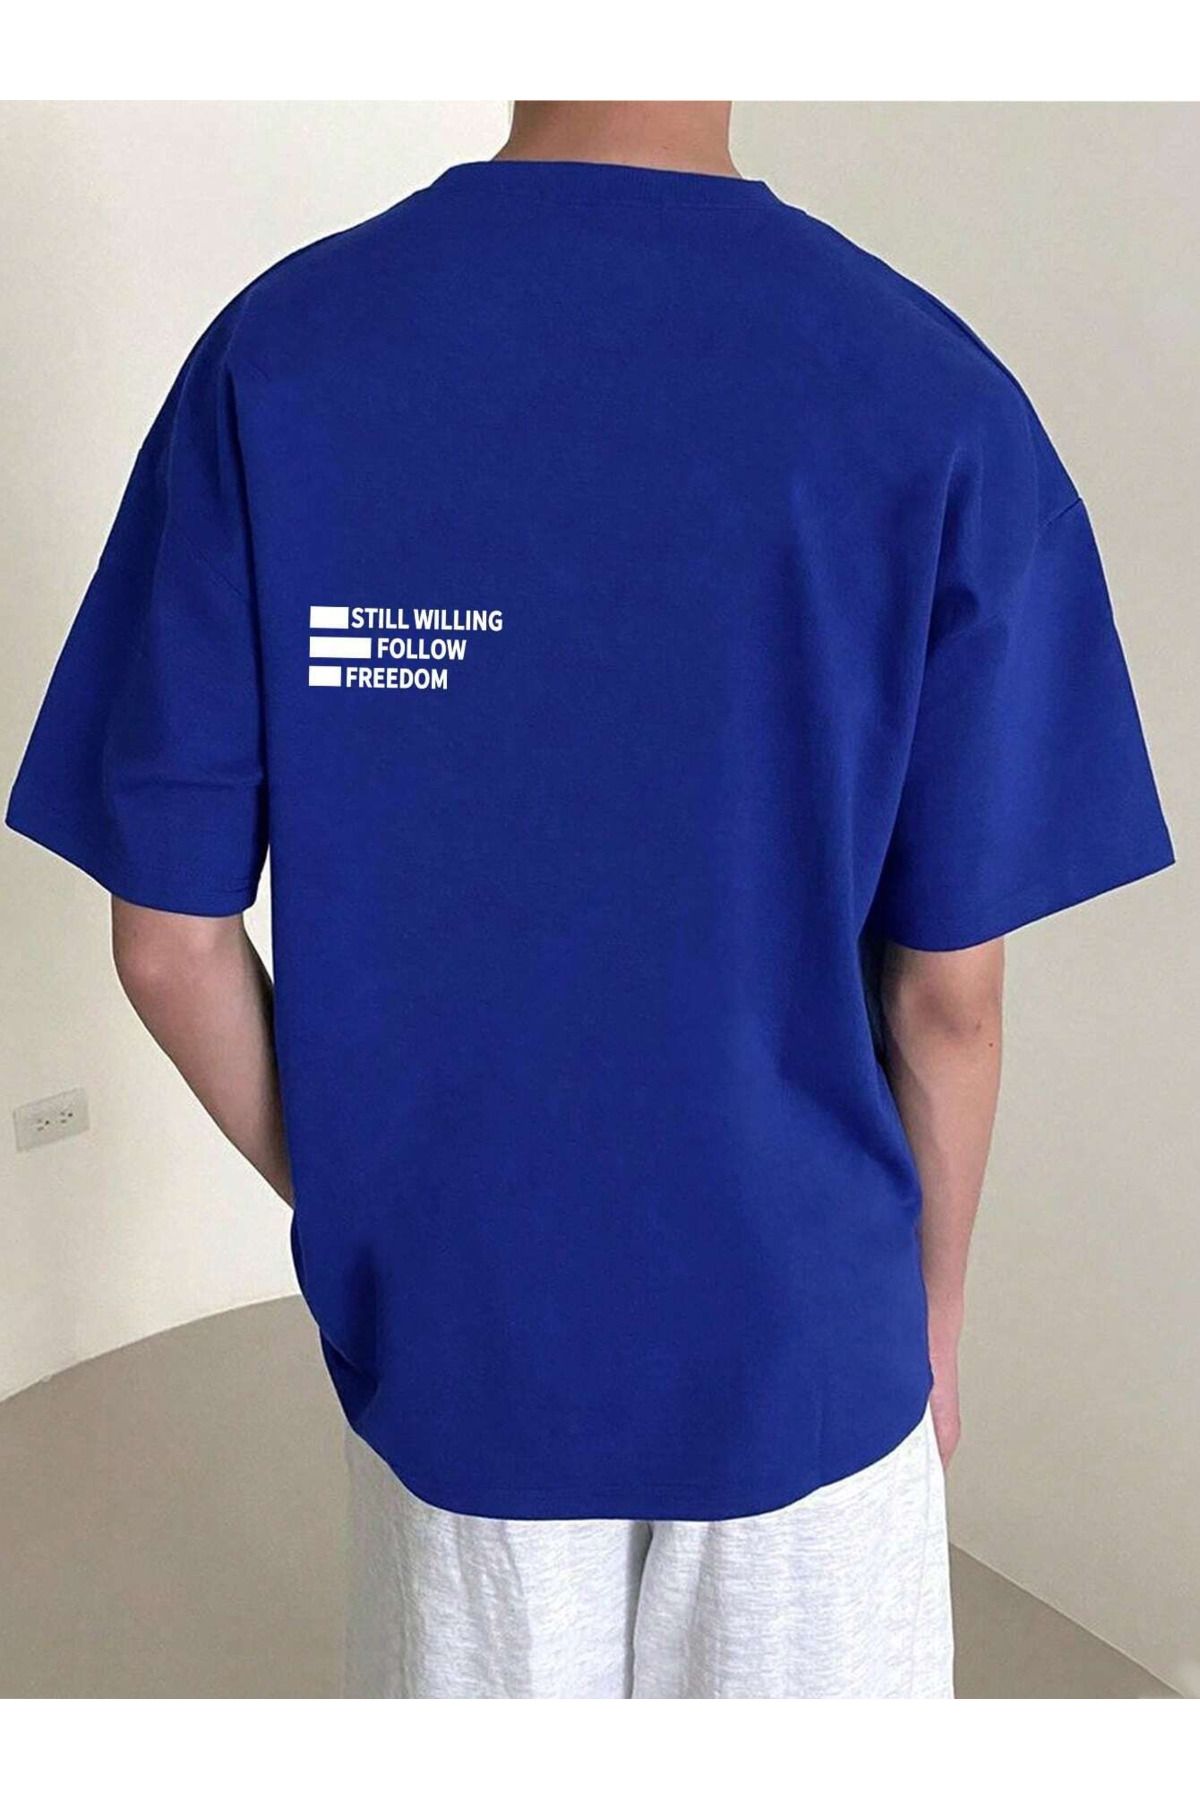 VBSVİBES Unisex Sax Mavisi Oversiz Still Follow Freedom Baskılı Örme T-shirt